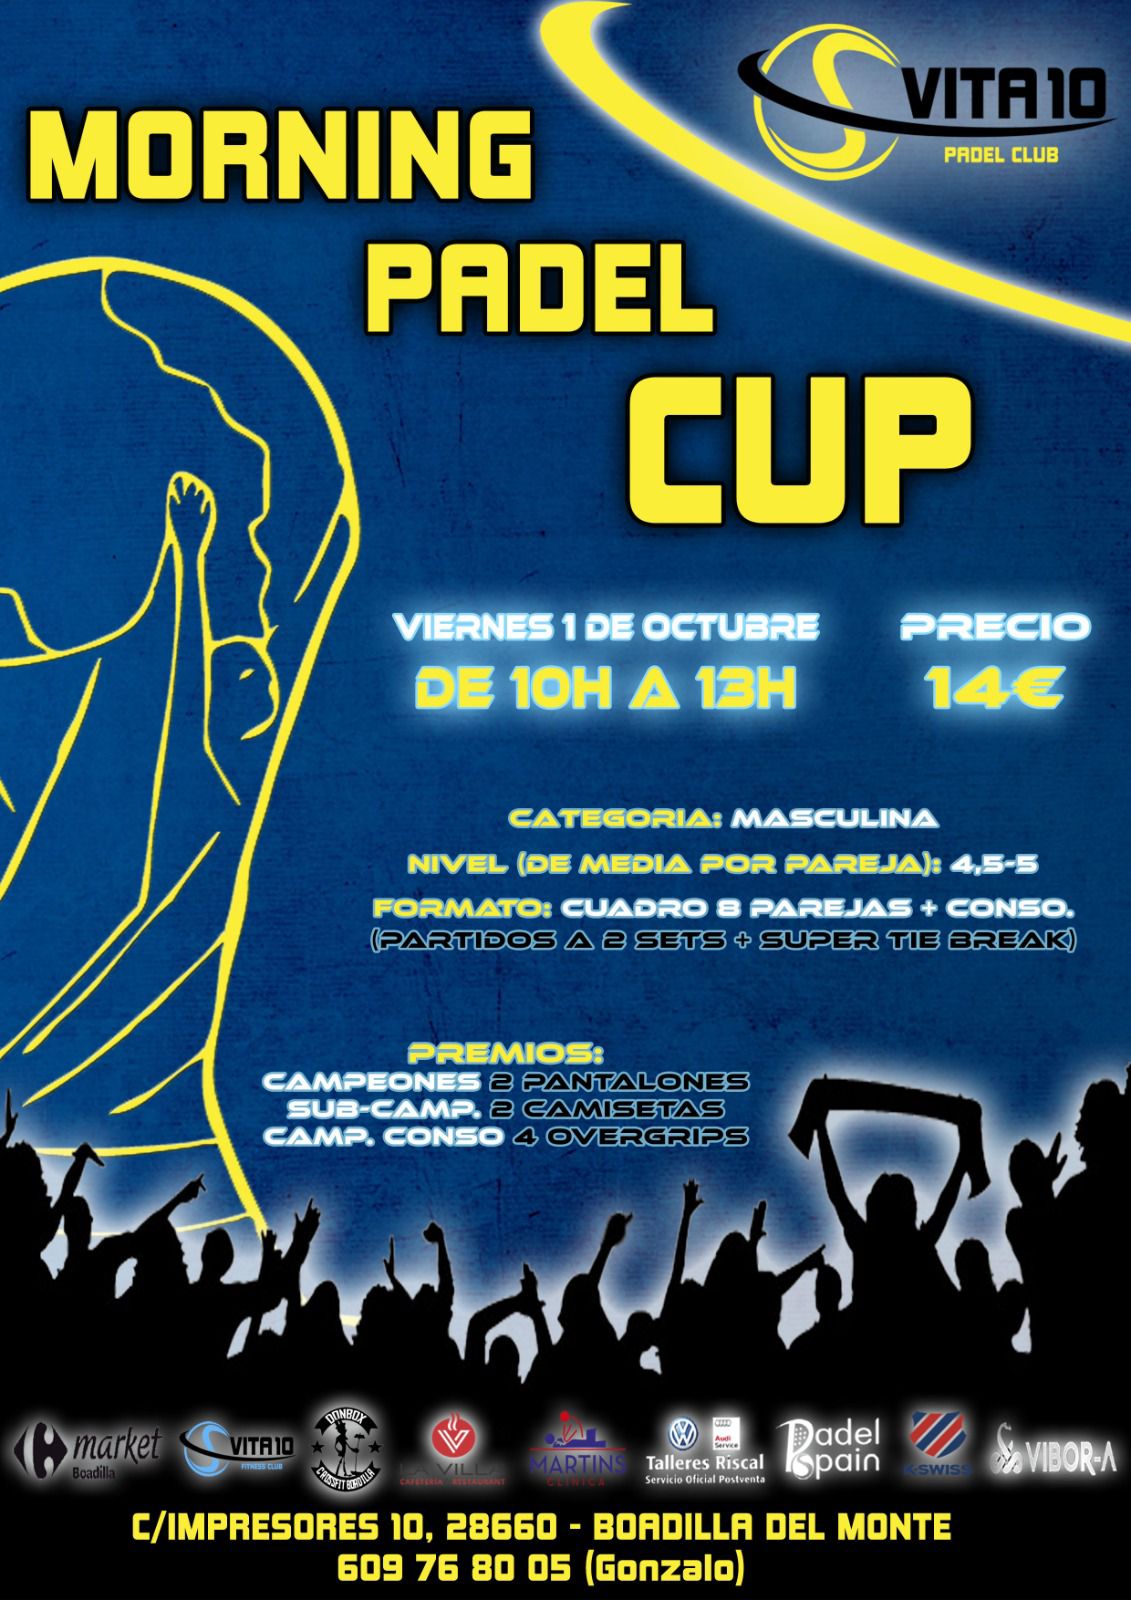 Morning Padel Cup Vita10